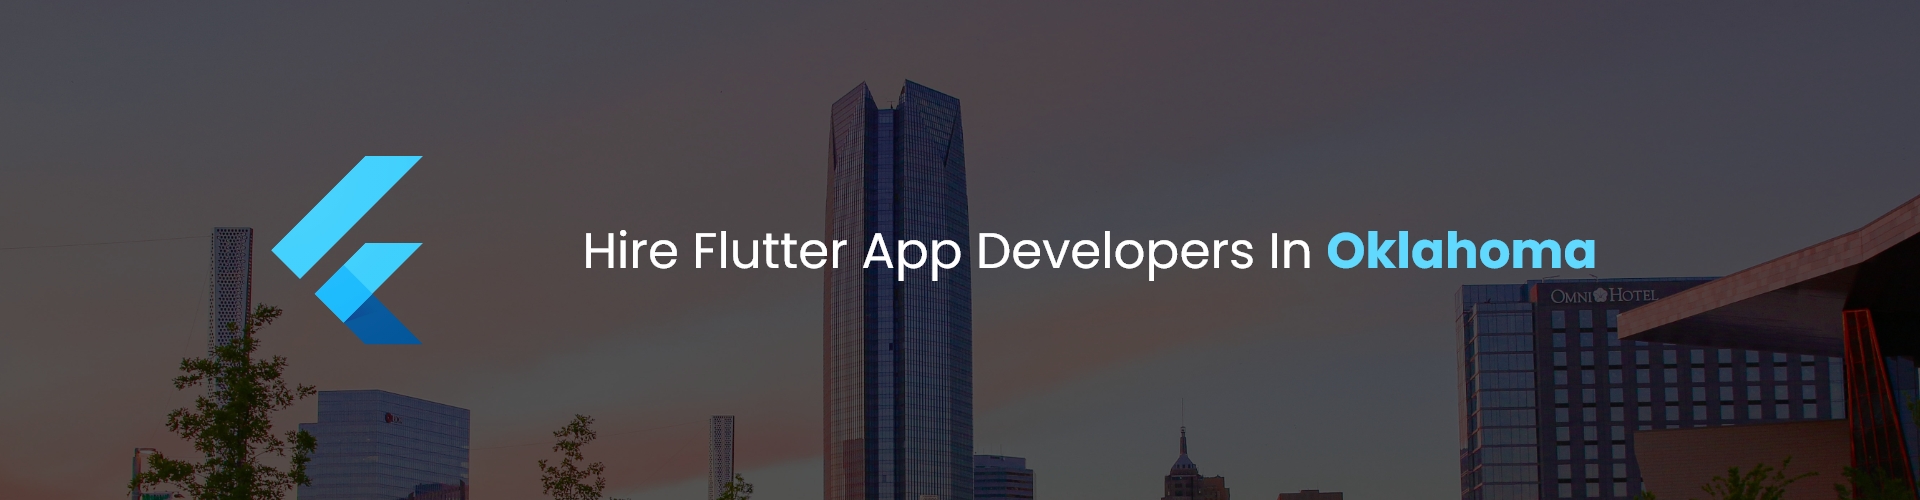 hire flutter app developers in oklahoma